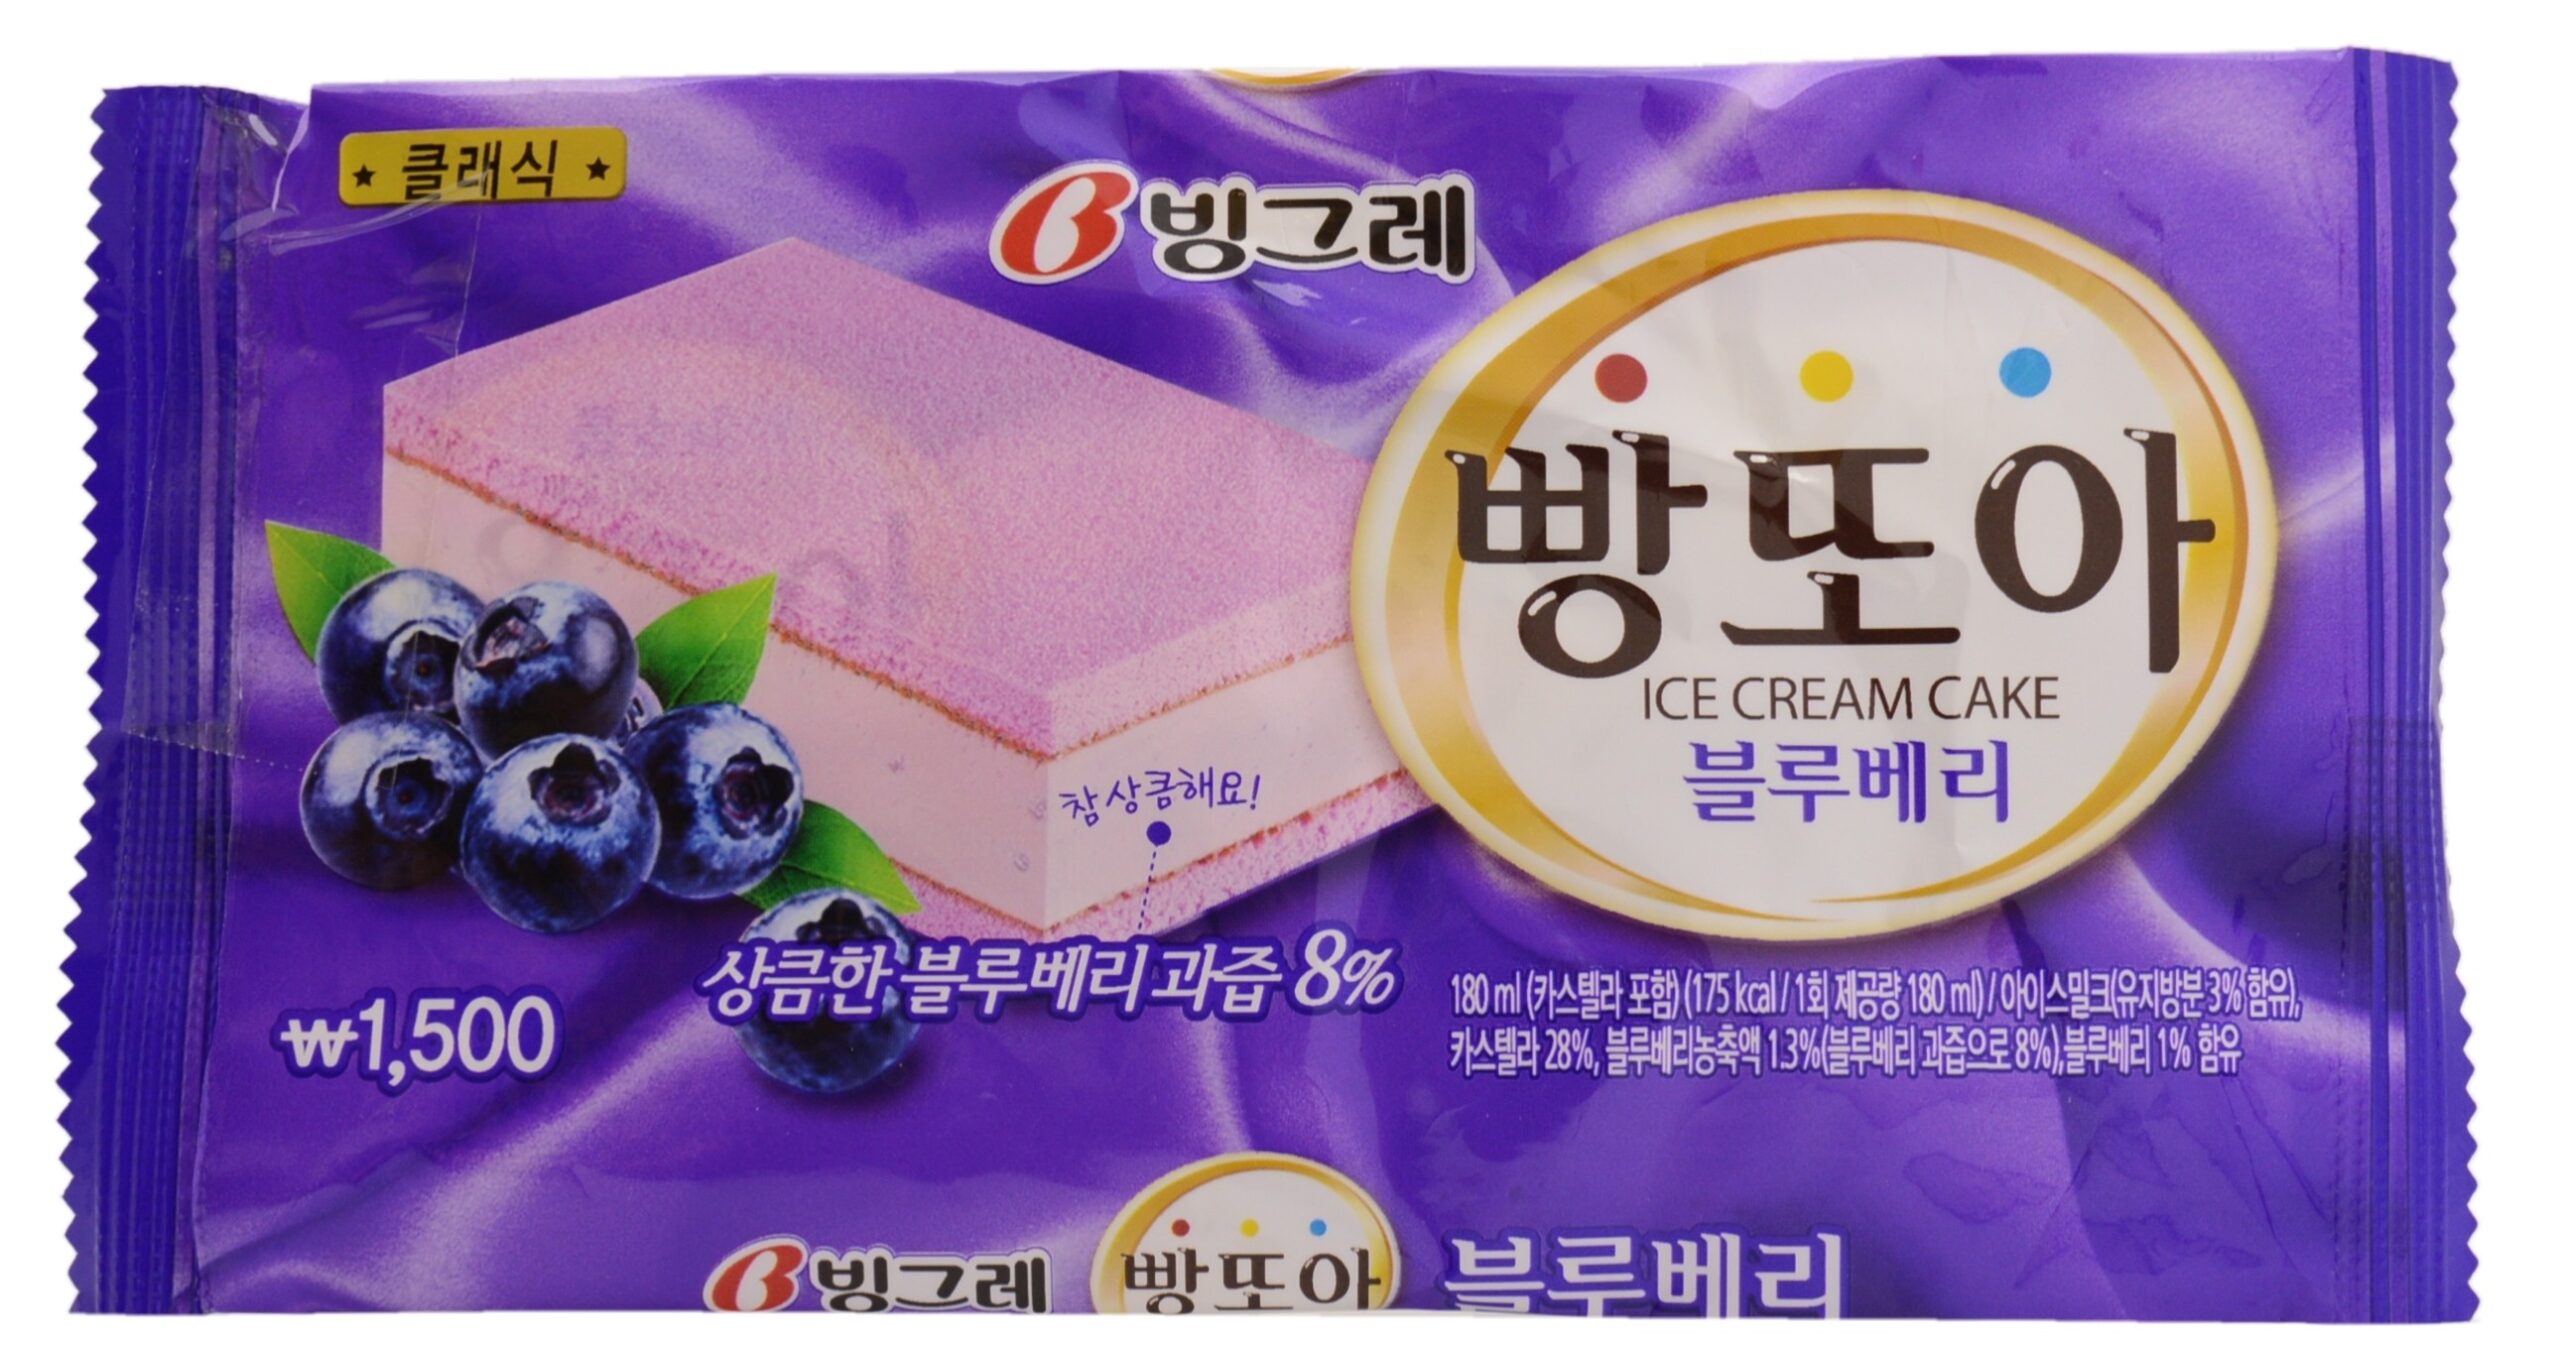 Blueberry Sandwich Ice Cream Cake